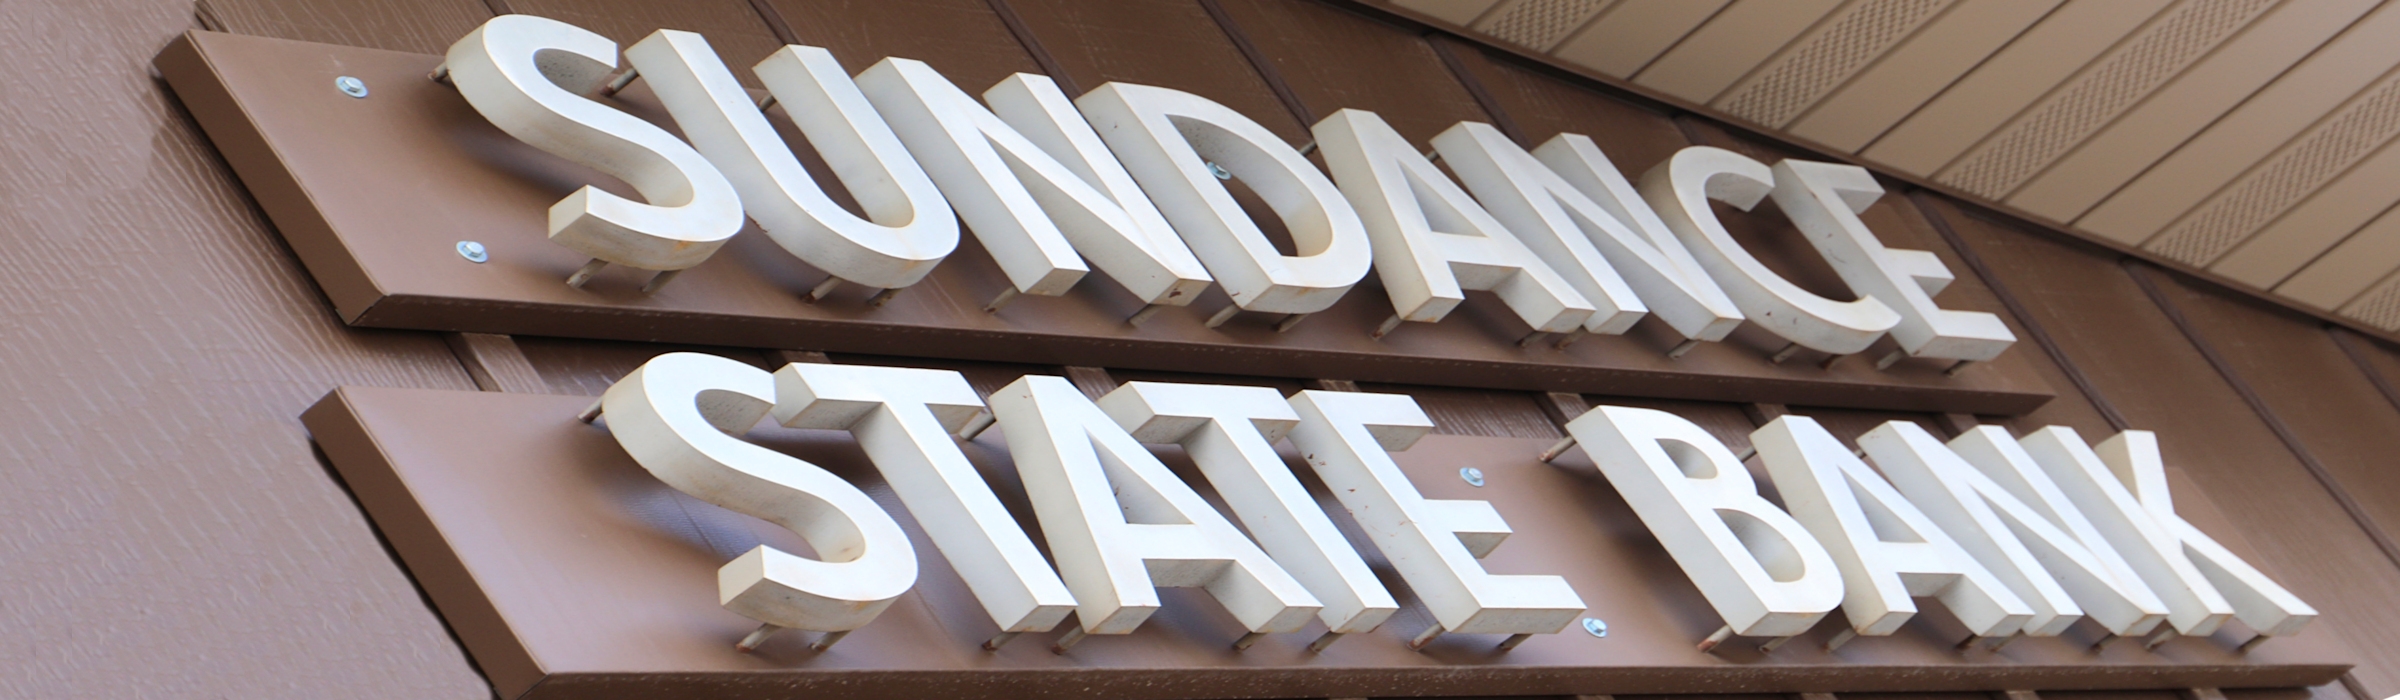 Sundance State Bank building sign